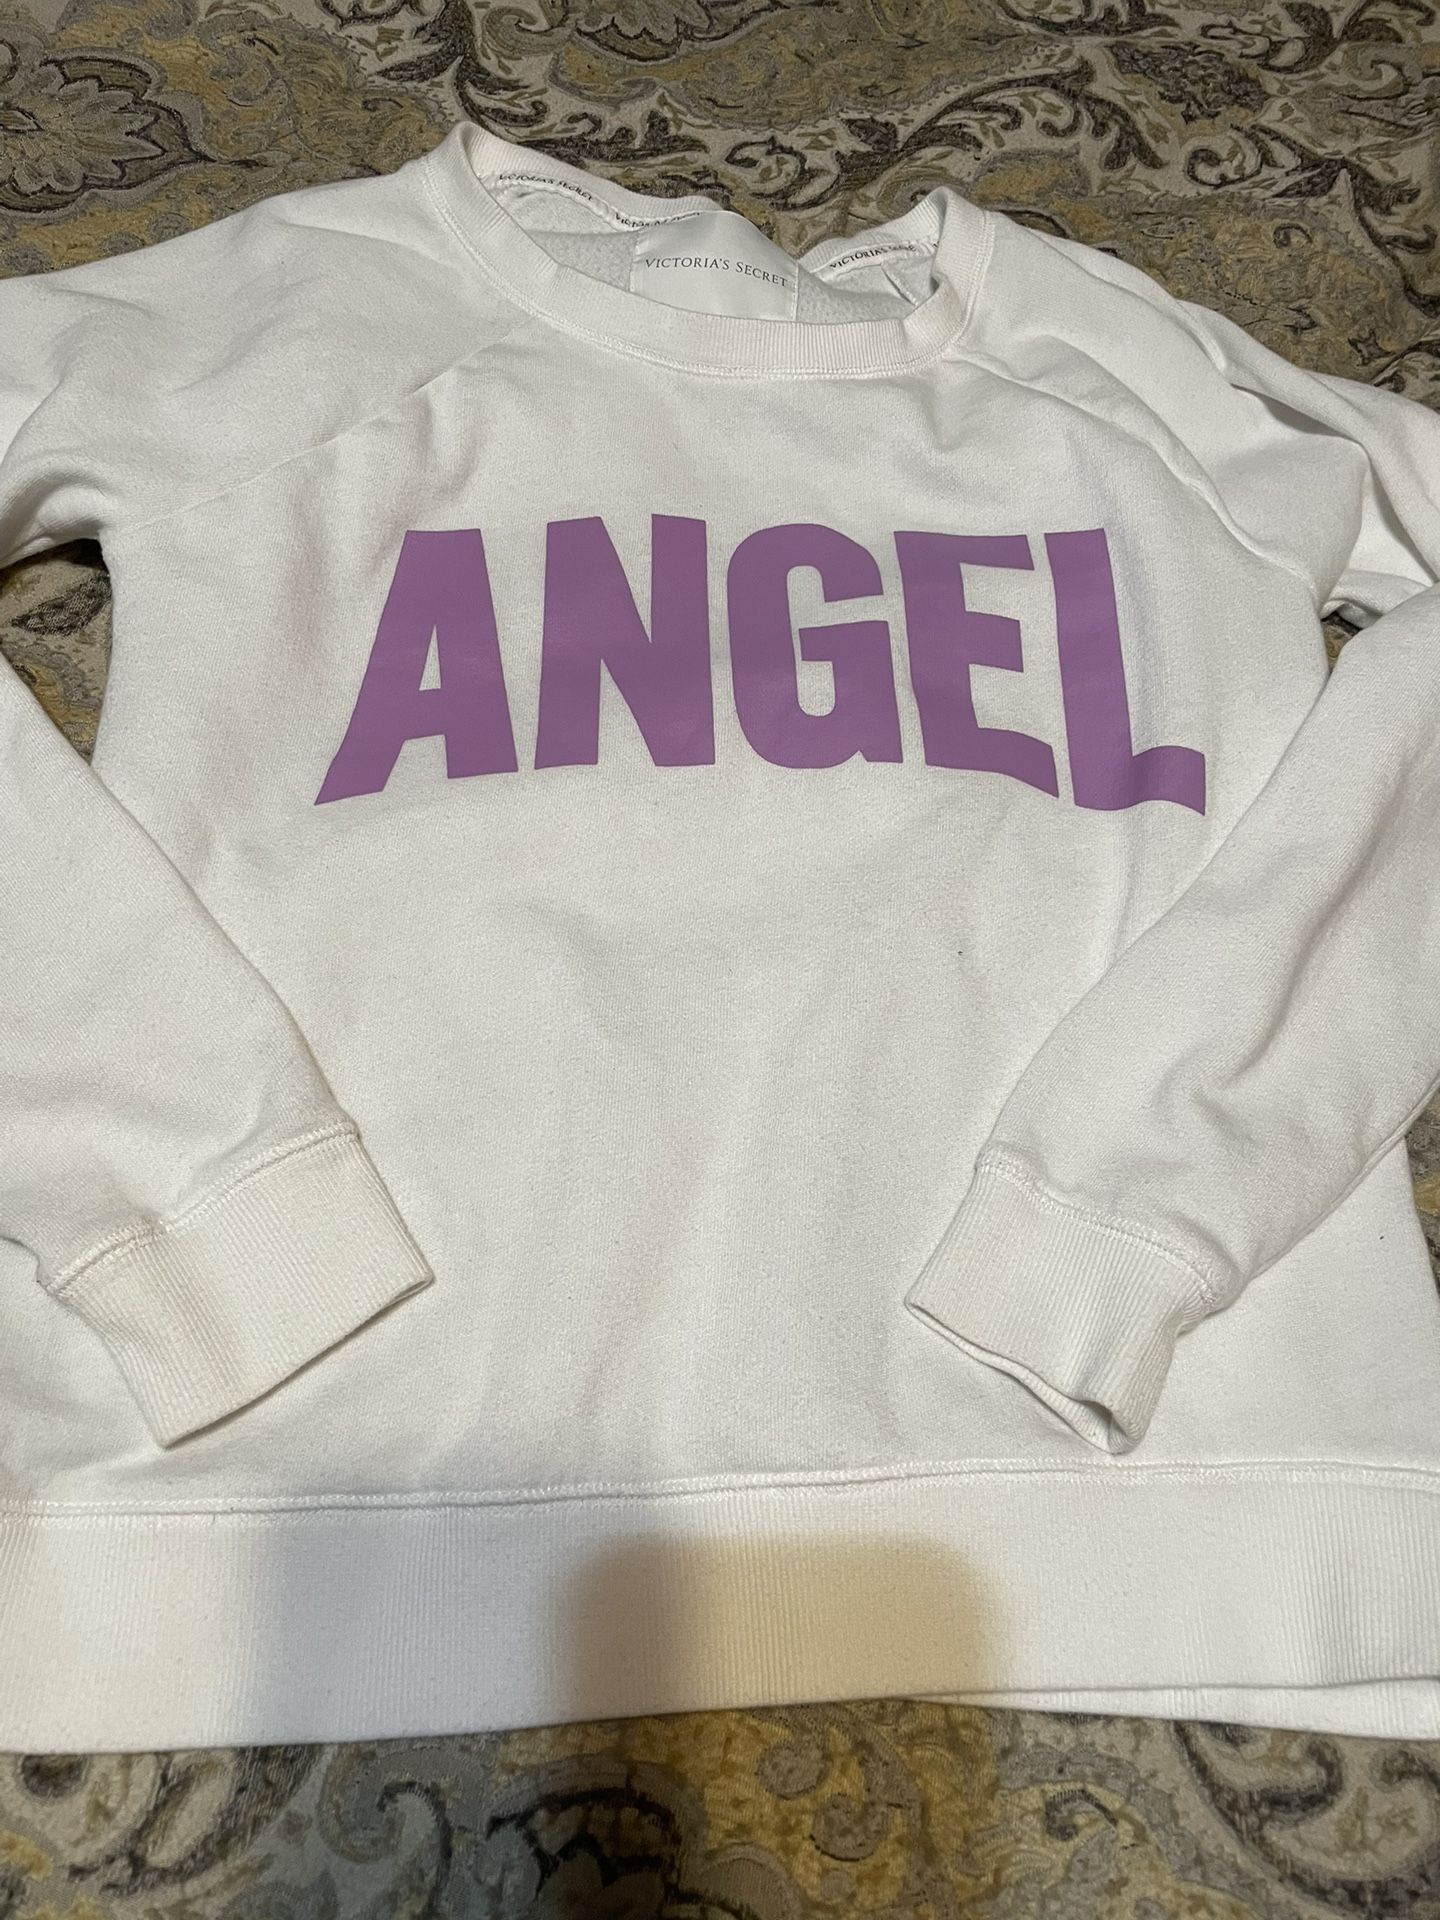 Womens Size Small VS Angel Sweatshirt